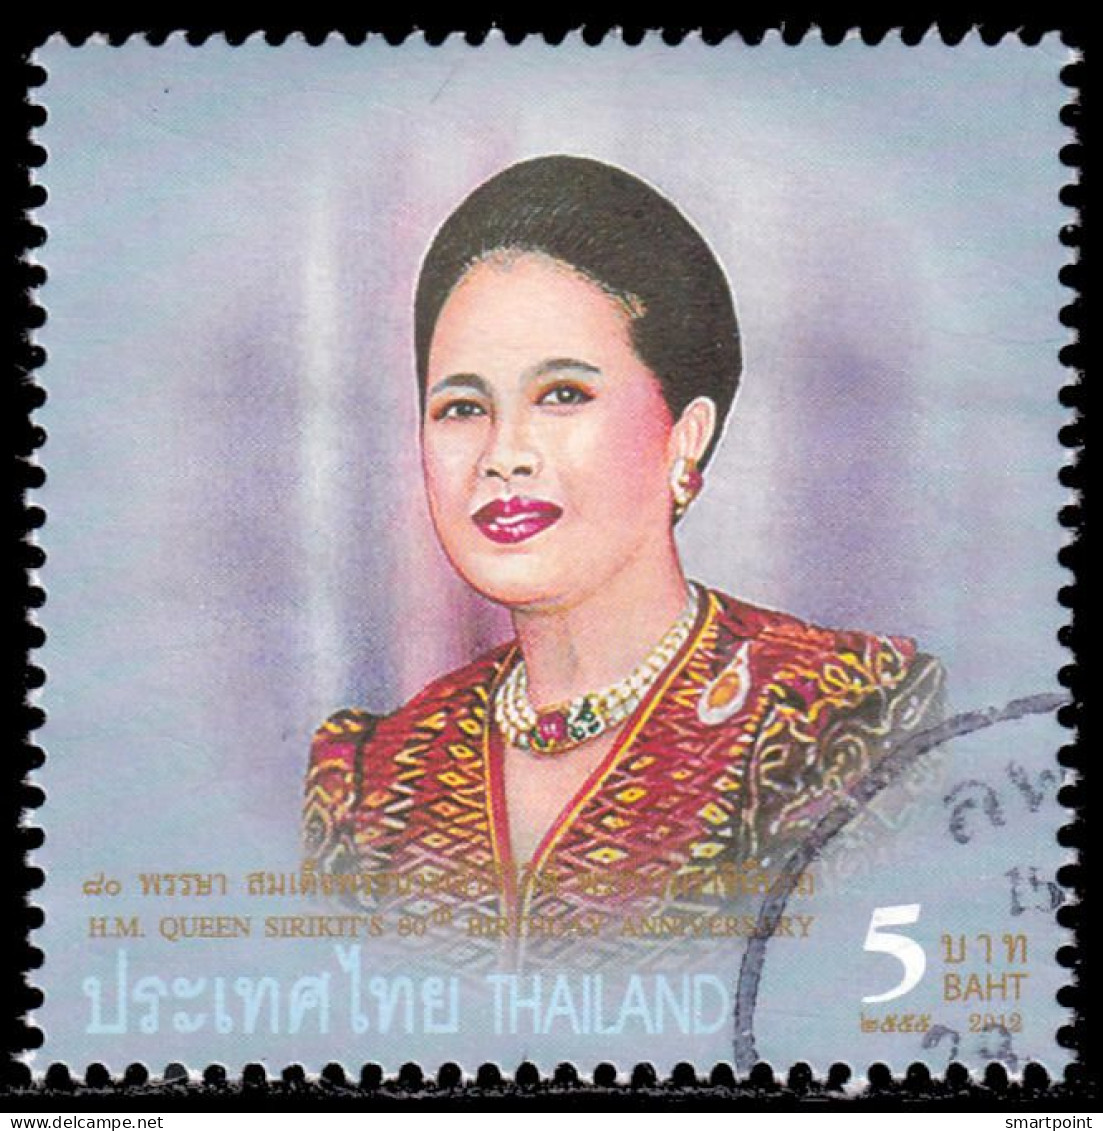 Thailand Stamp 2012 H.M. Queen Sirikit's 80th Birthday Anniversary 5 Baht - Used - Thailand